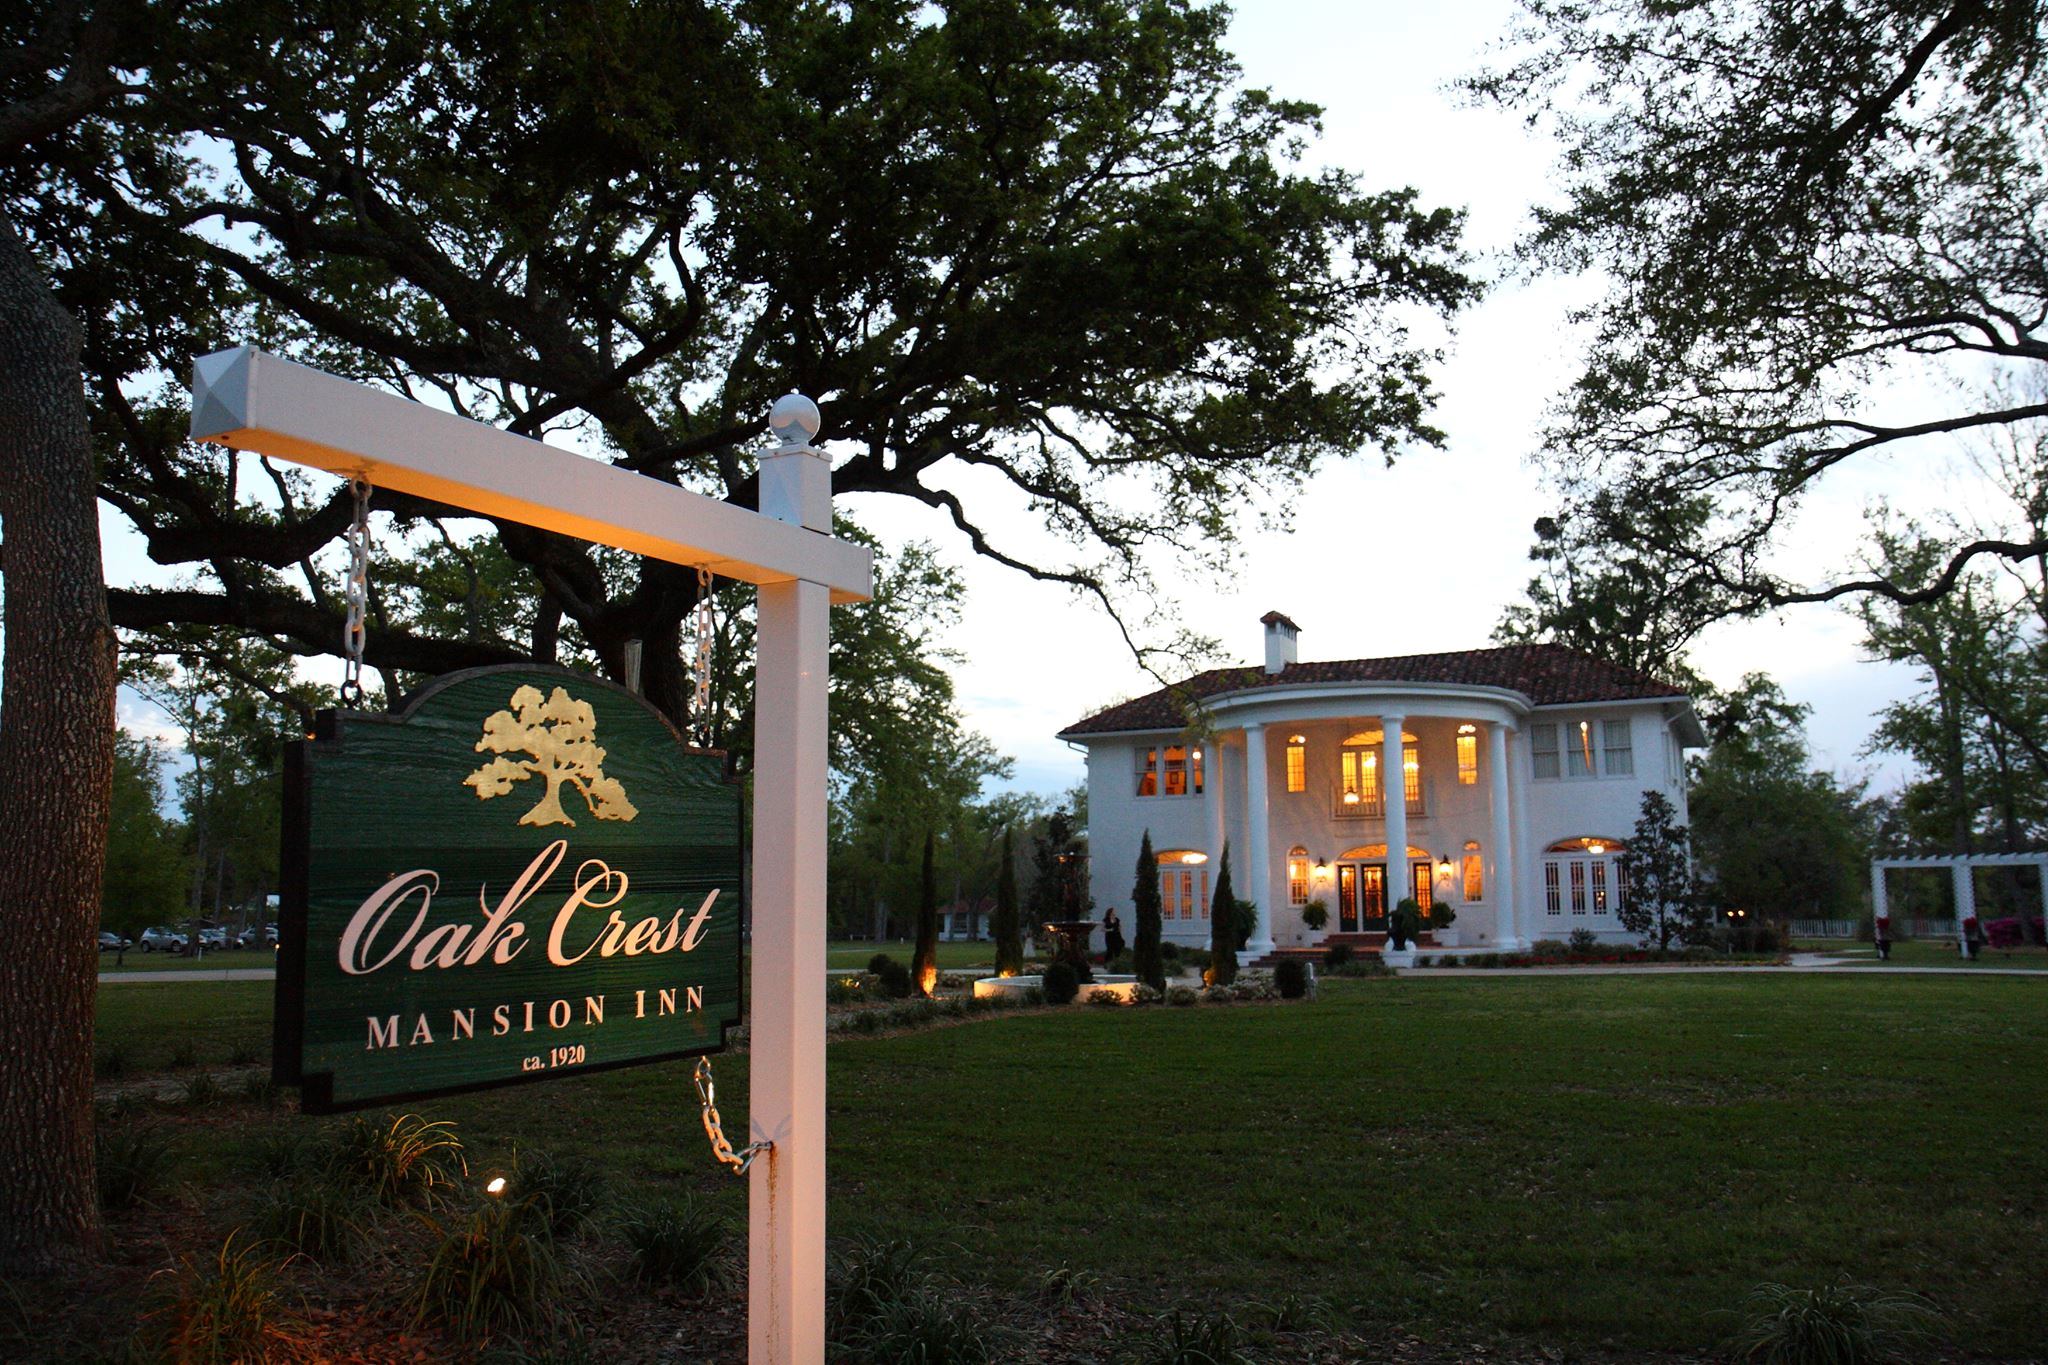 Oak Crest Mansion Inn - 1